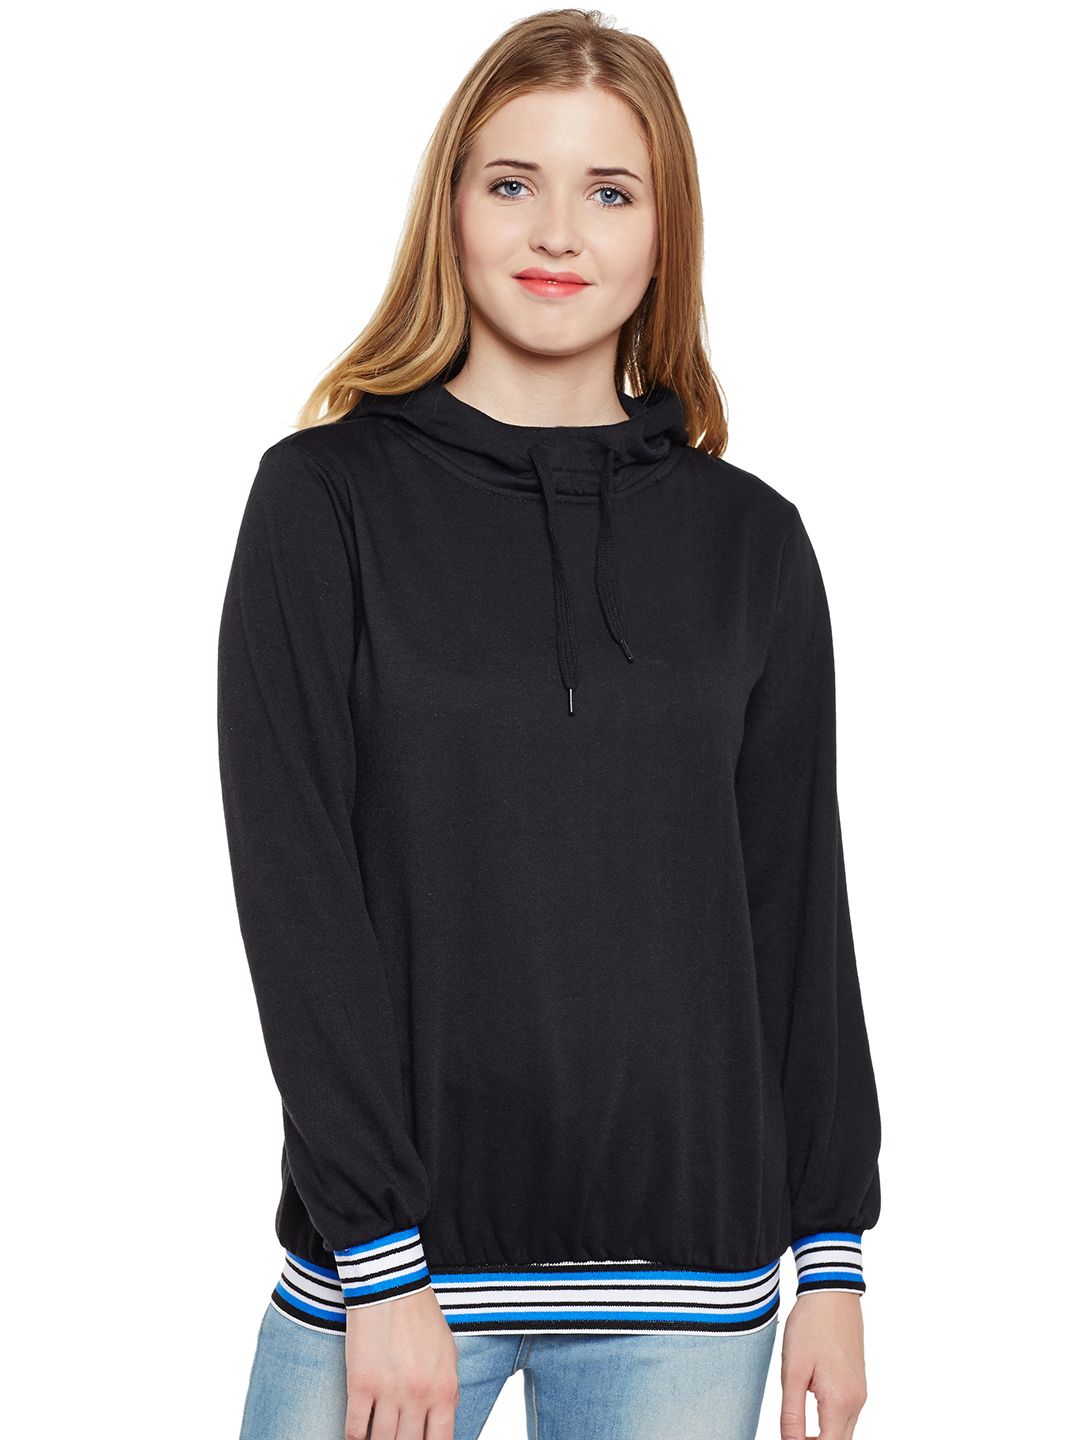 Belle Fille Women Black Solid Hooded Sweatshirt Price in India